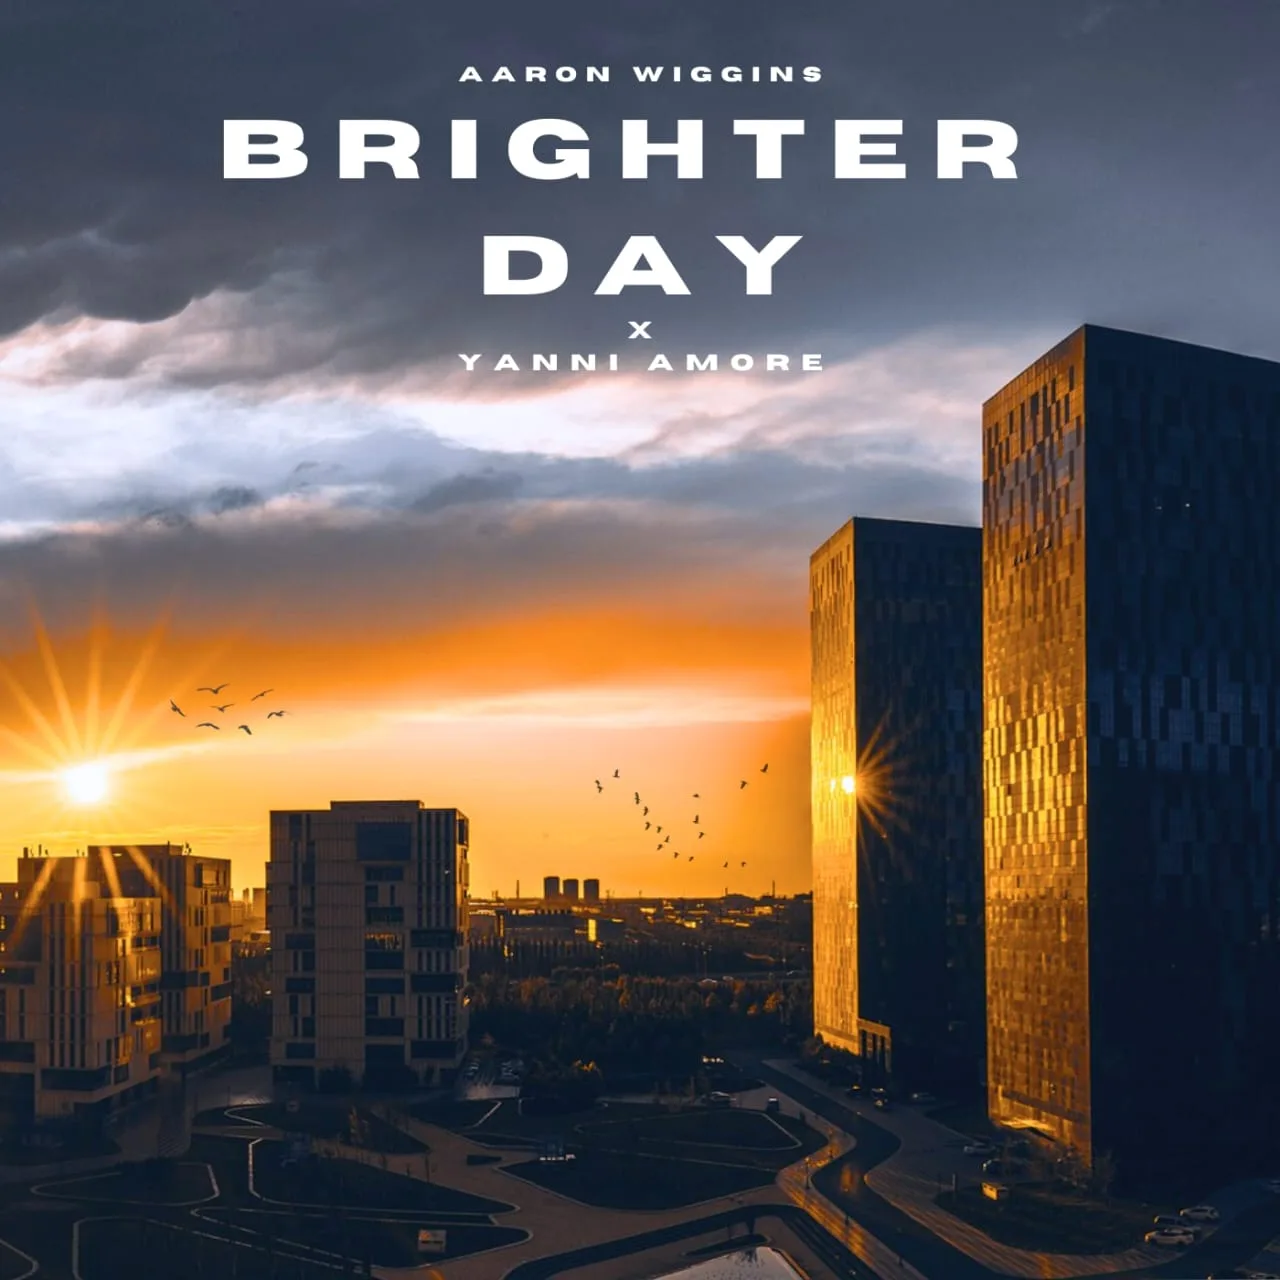 Brighter Day